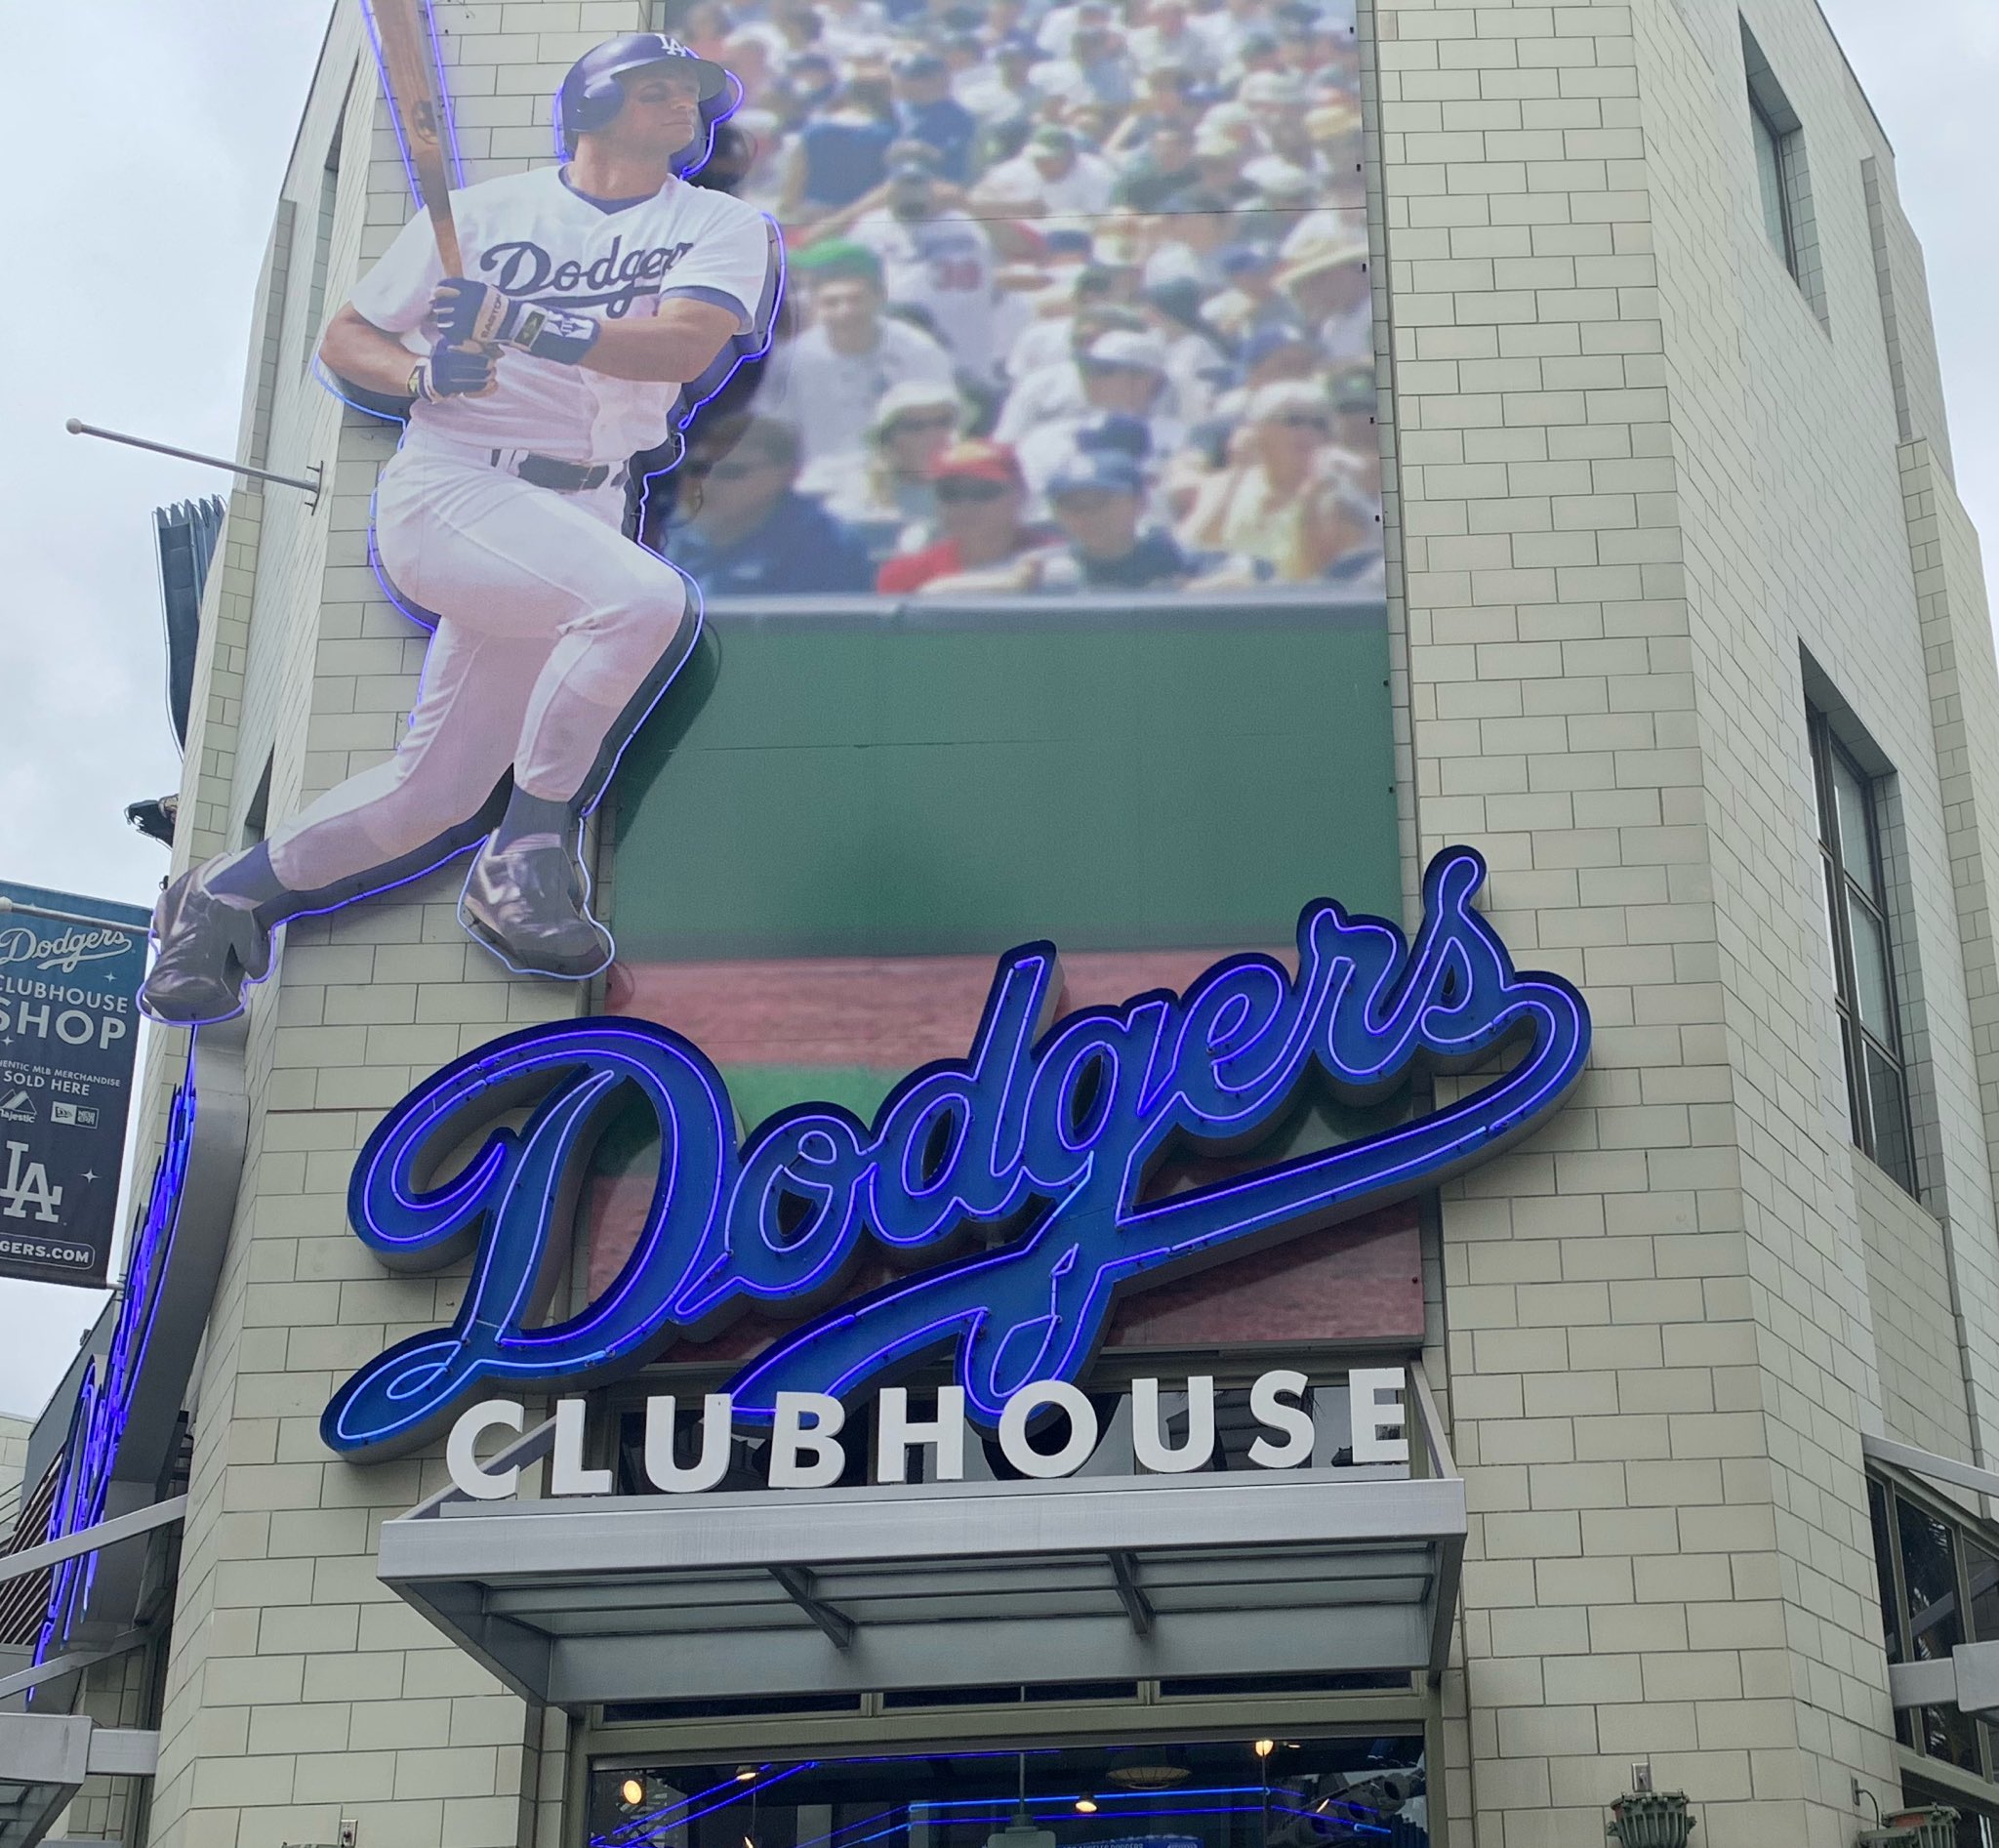 Inside Universal on Twitter: Something tells us the Dodgers